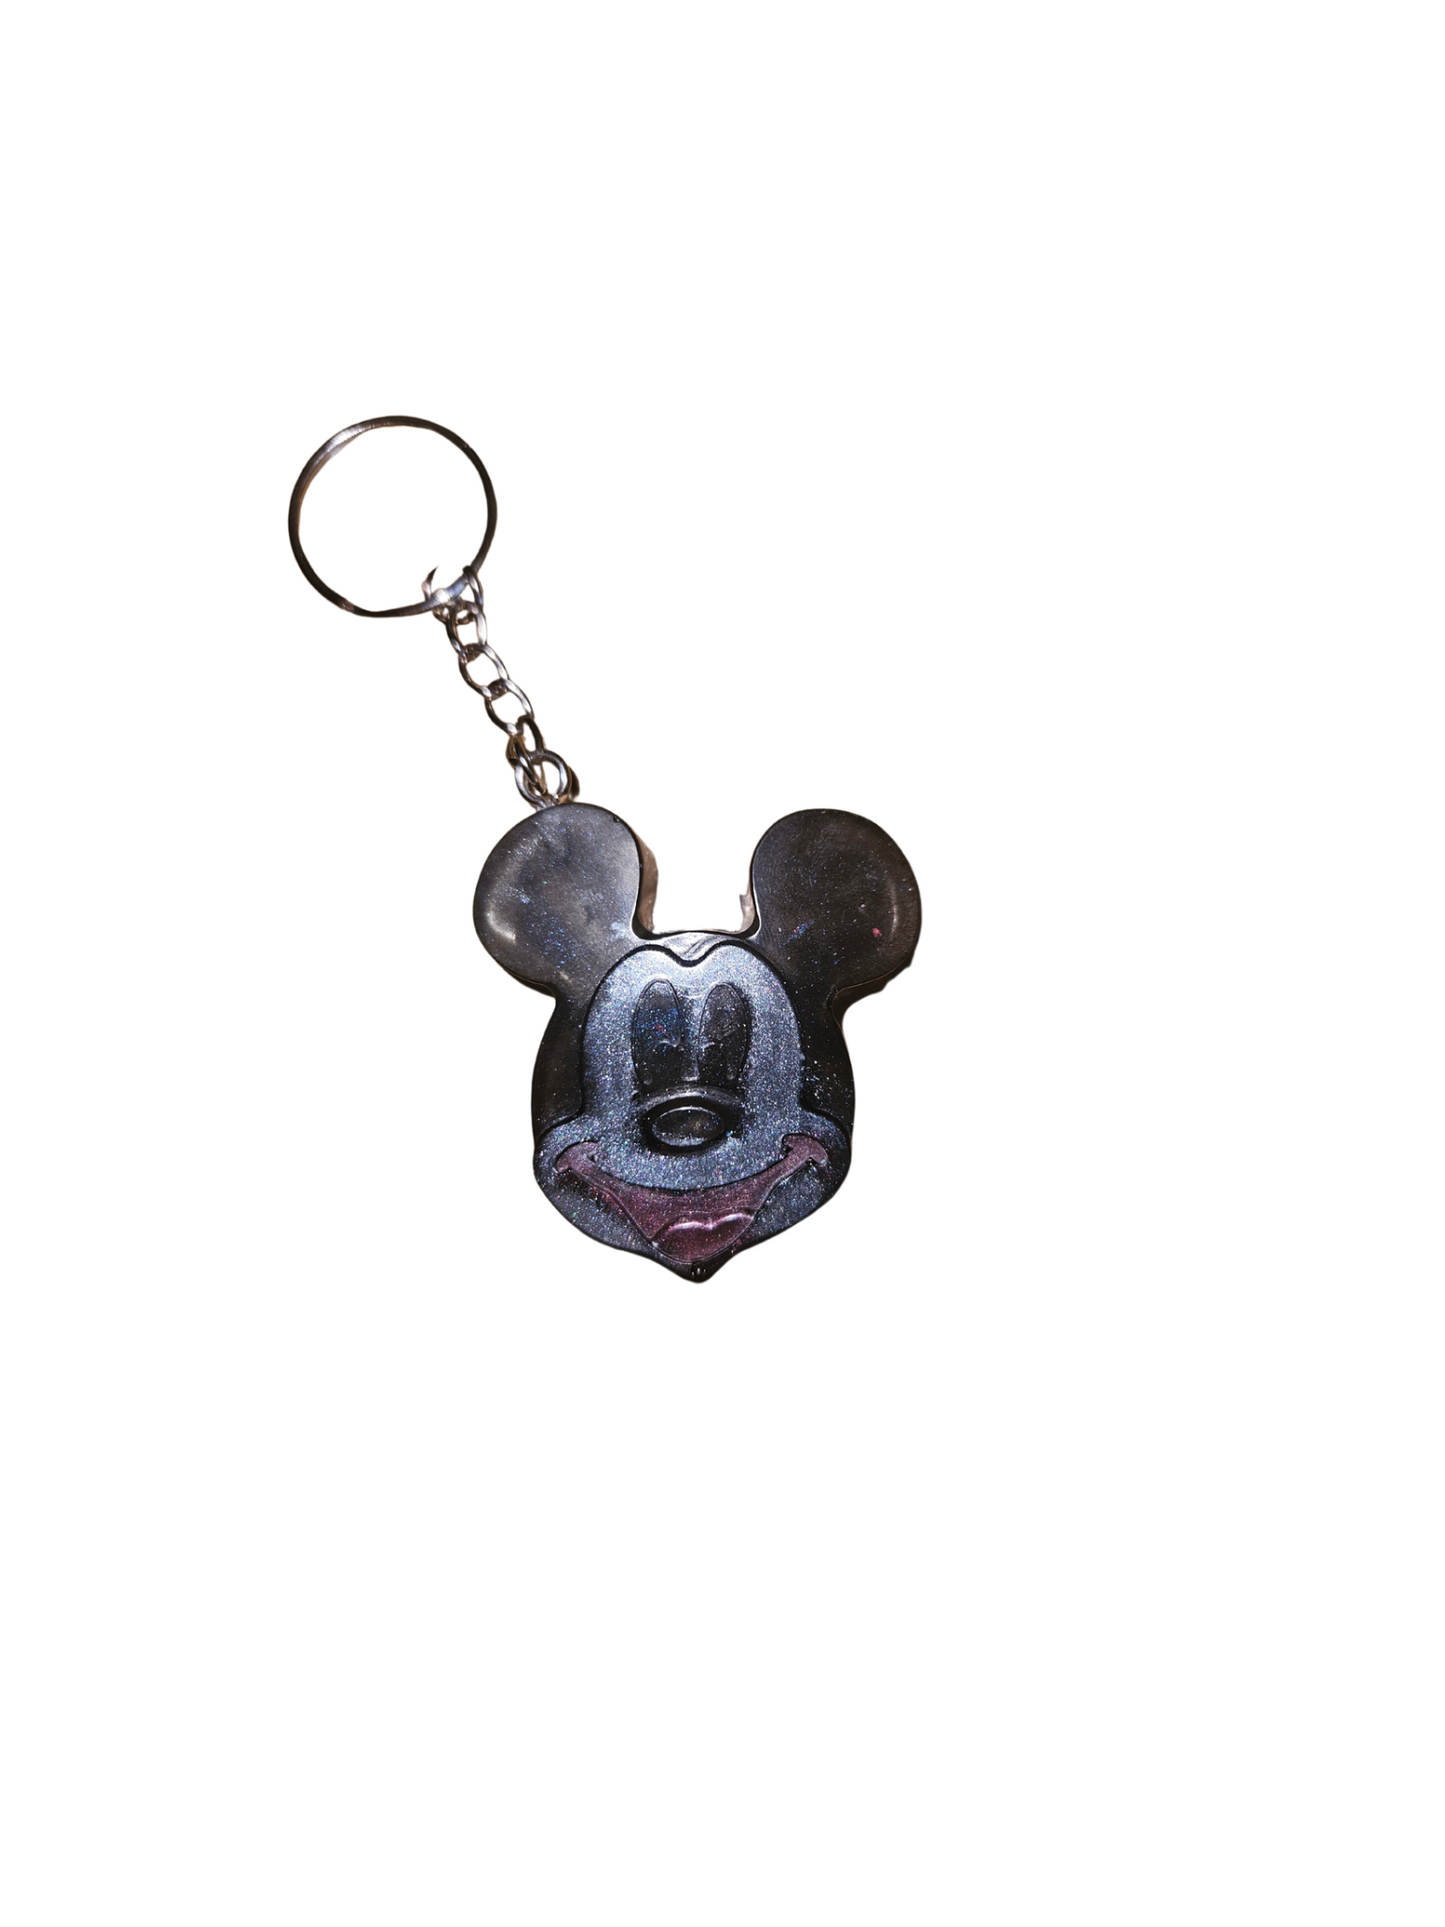 Mickey key ring